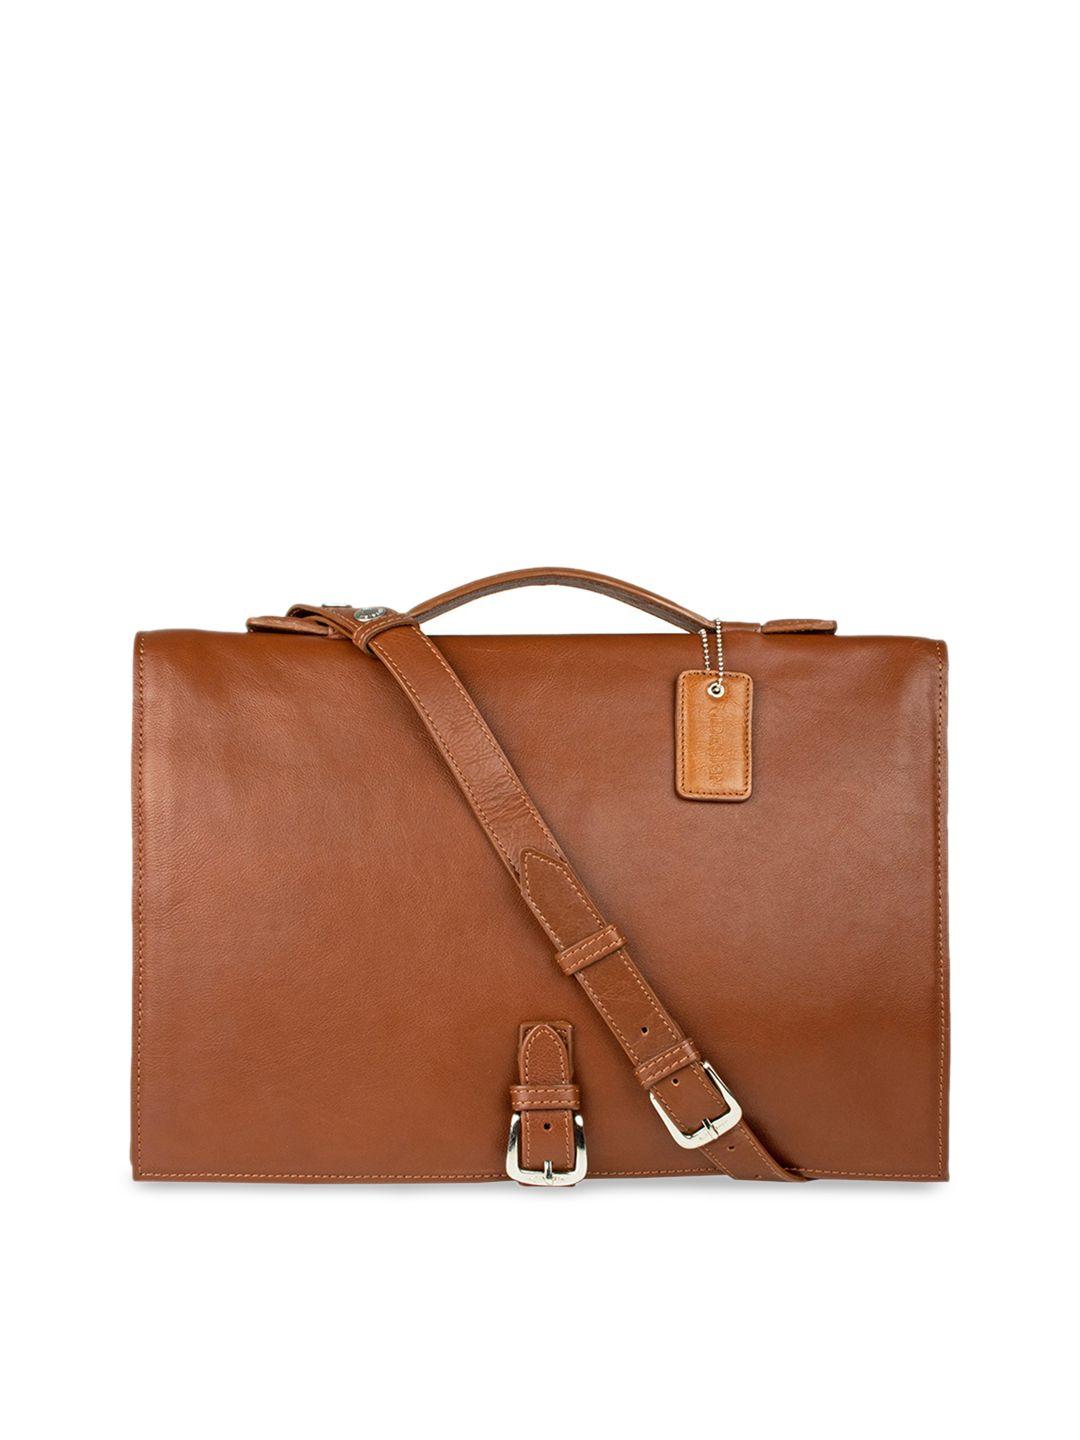 hidesign men tan brown solid leather messenger bag